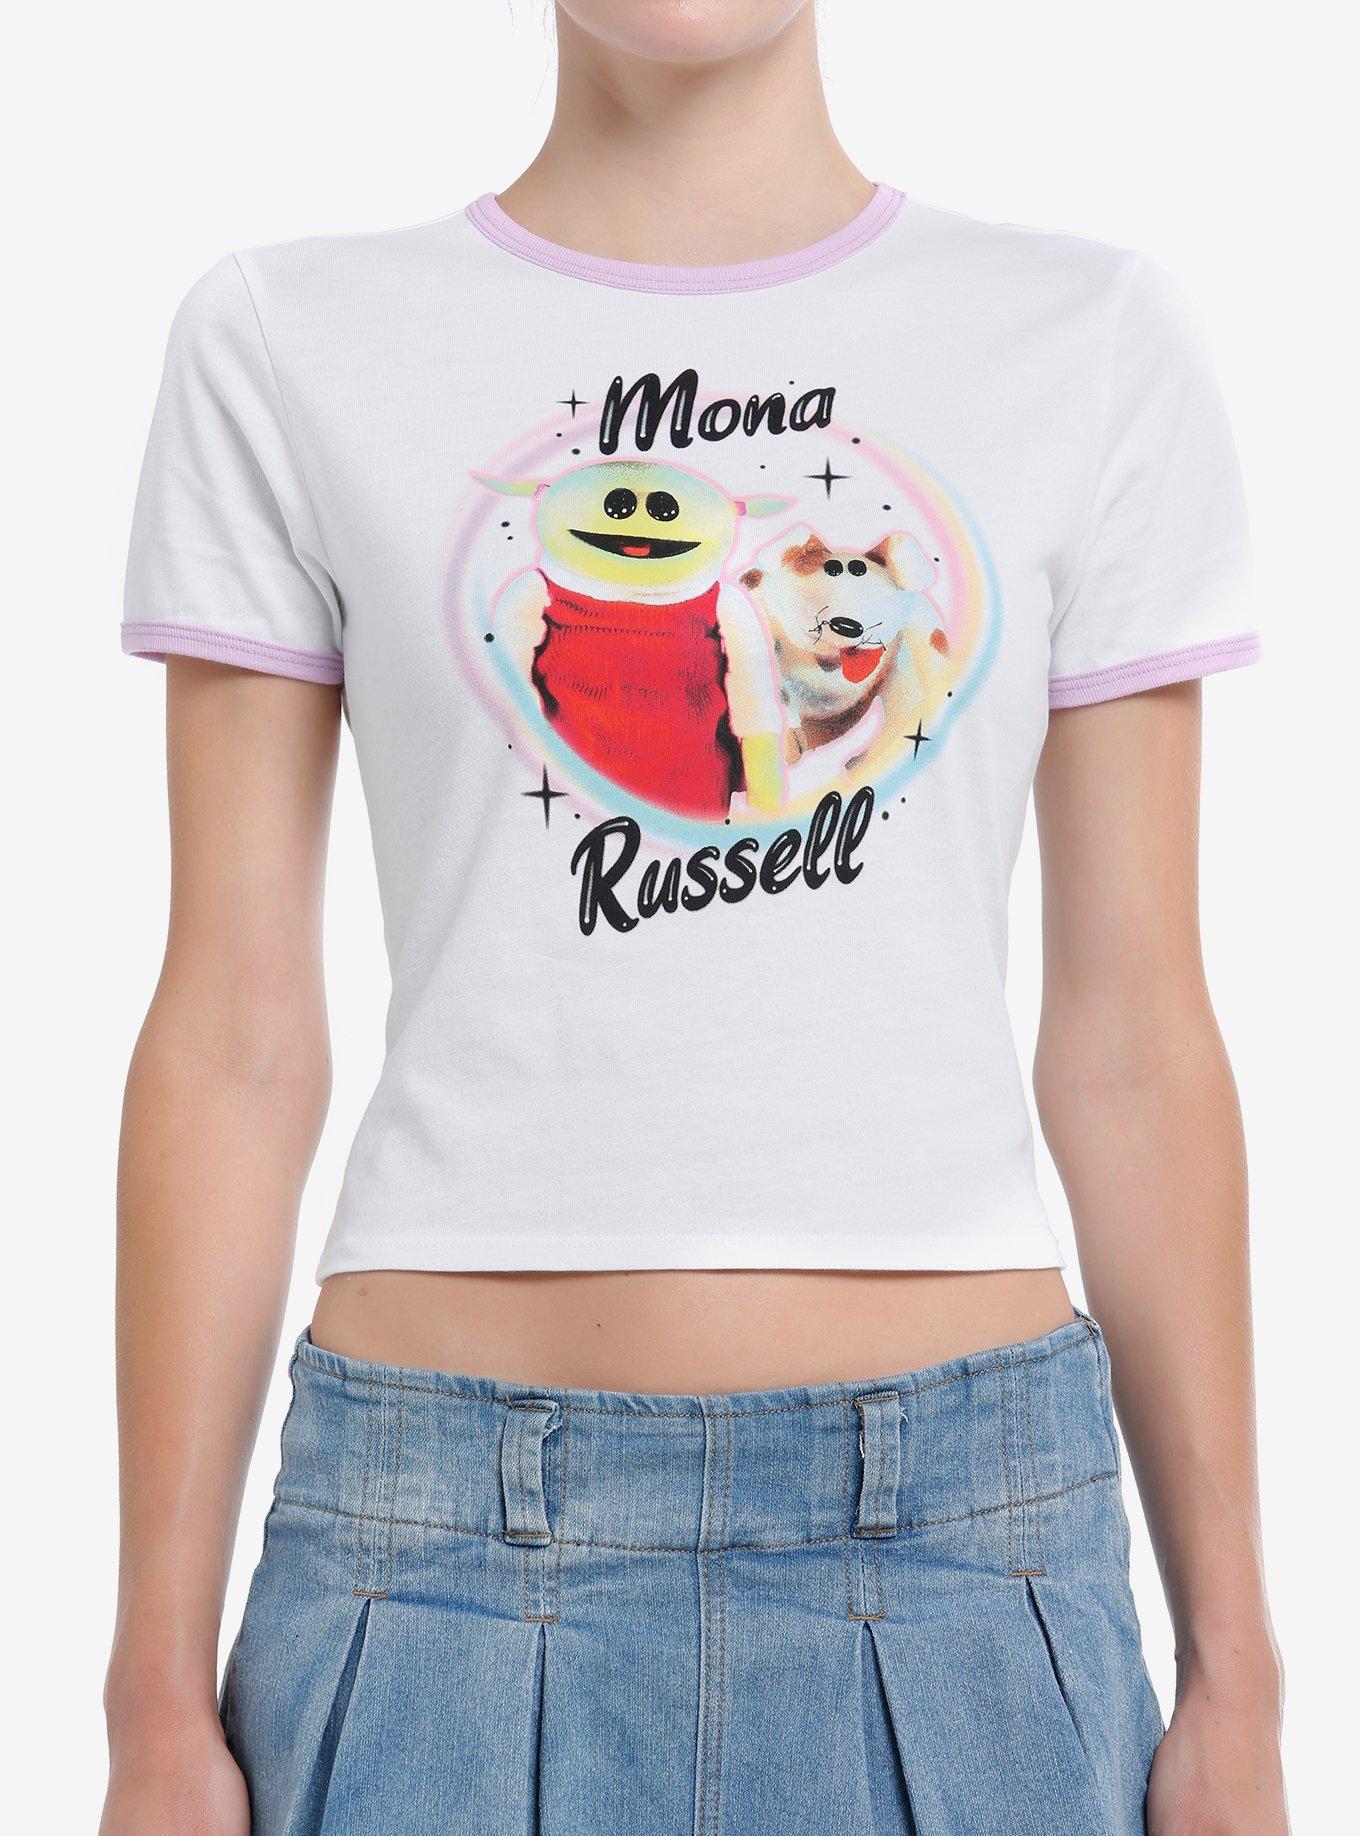 Nanalan' Mona Russell Spray Paint Ringer Girls Baby T-Shirt, , hi-res